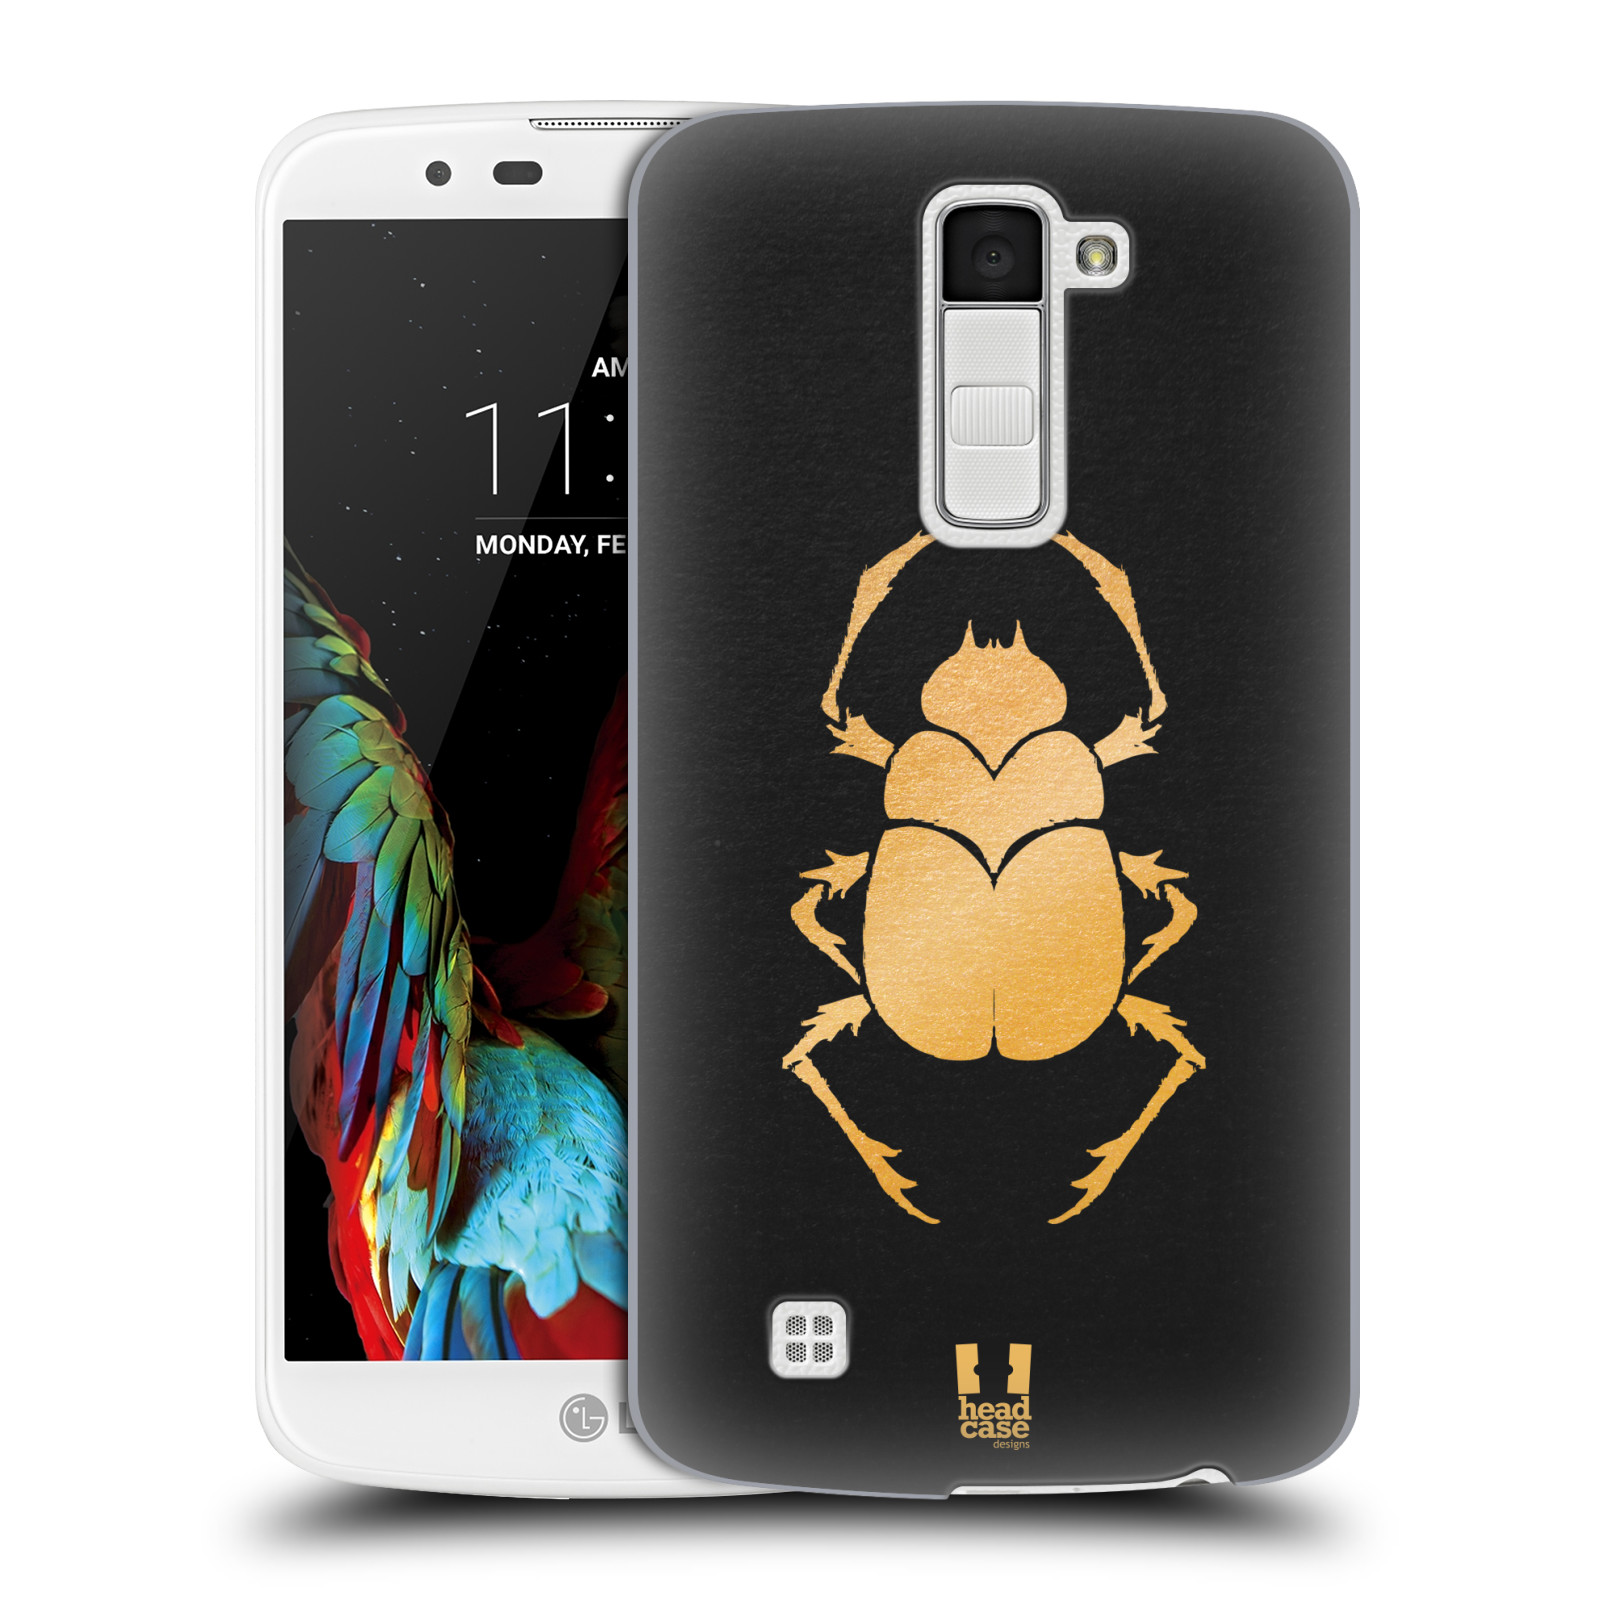 HEAD CASE plastový obal na mobil LG K10 vzor EGYPT zlatá a černá BROUK SKARAB